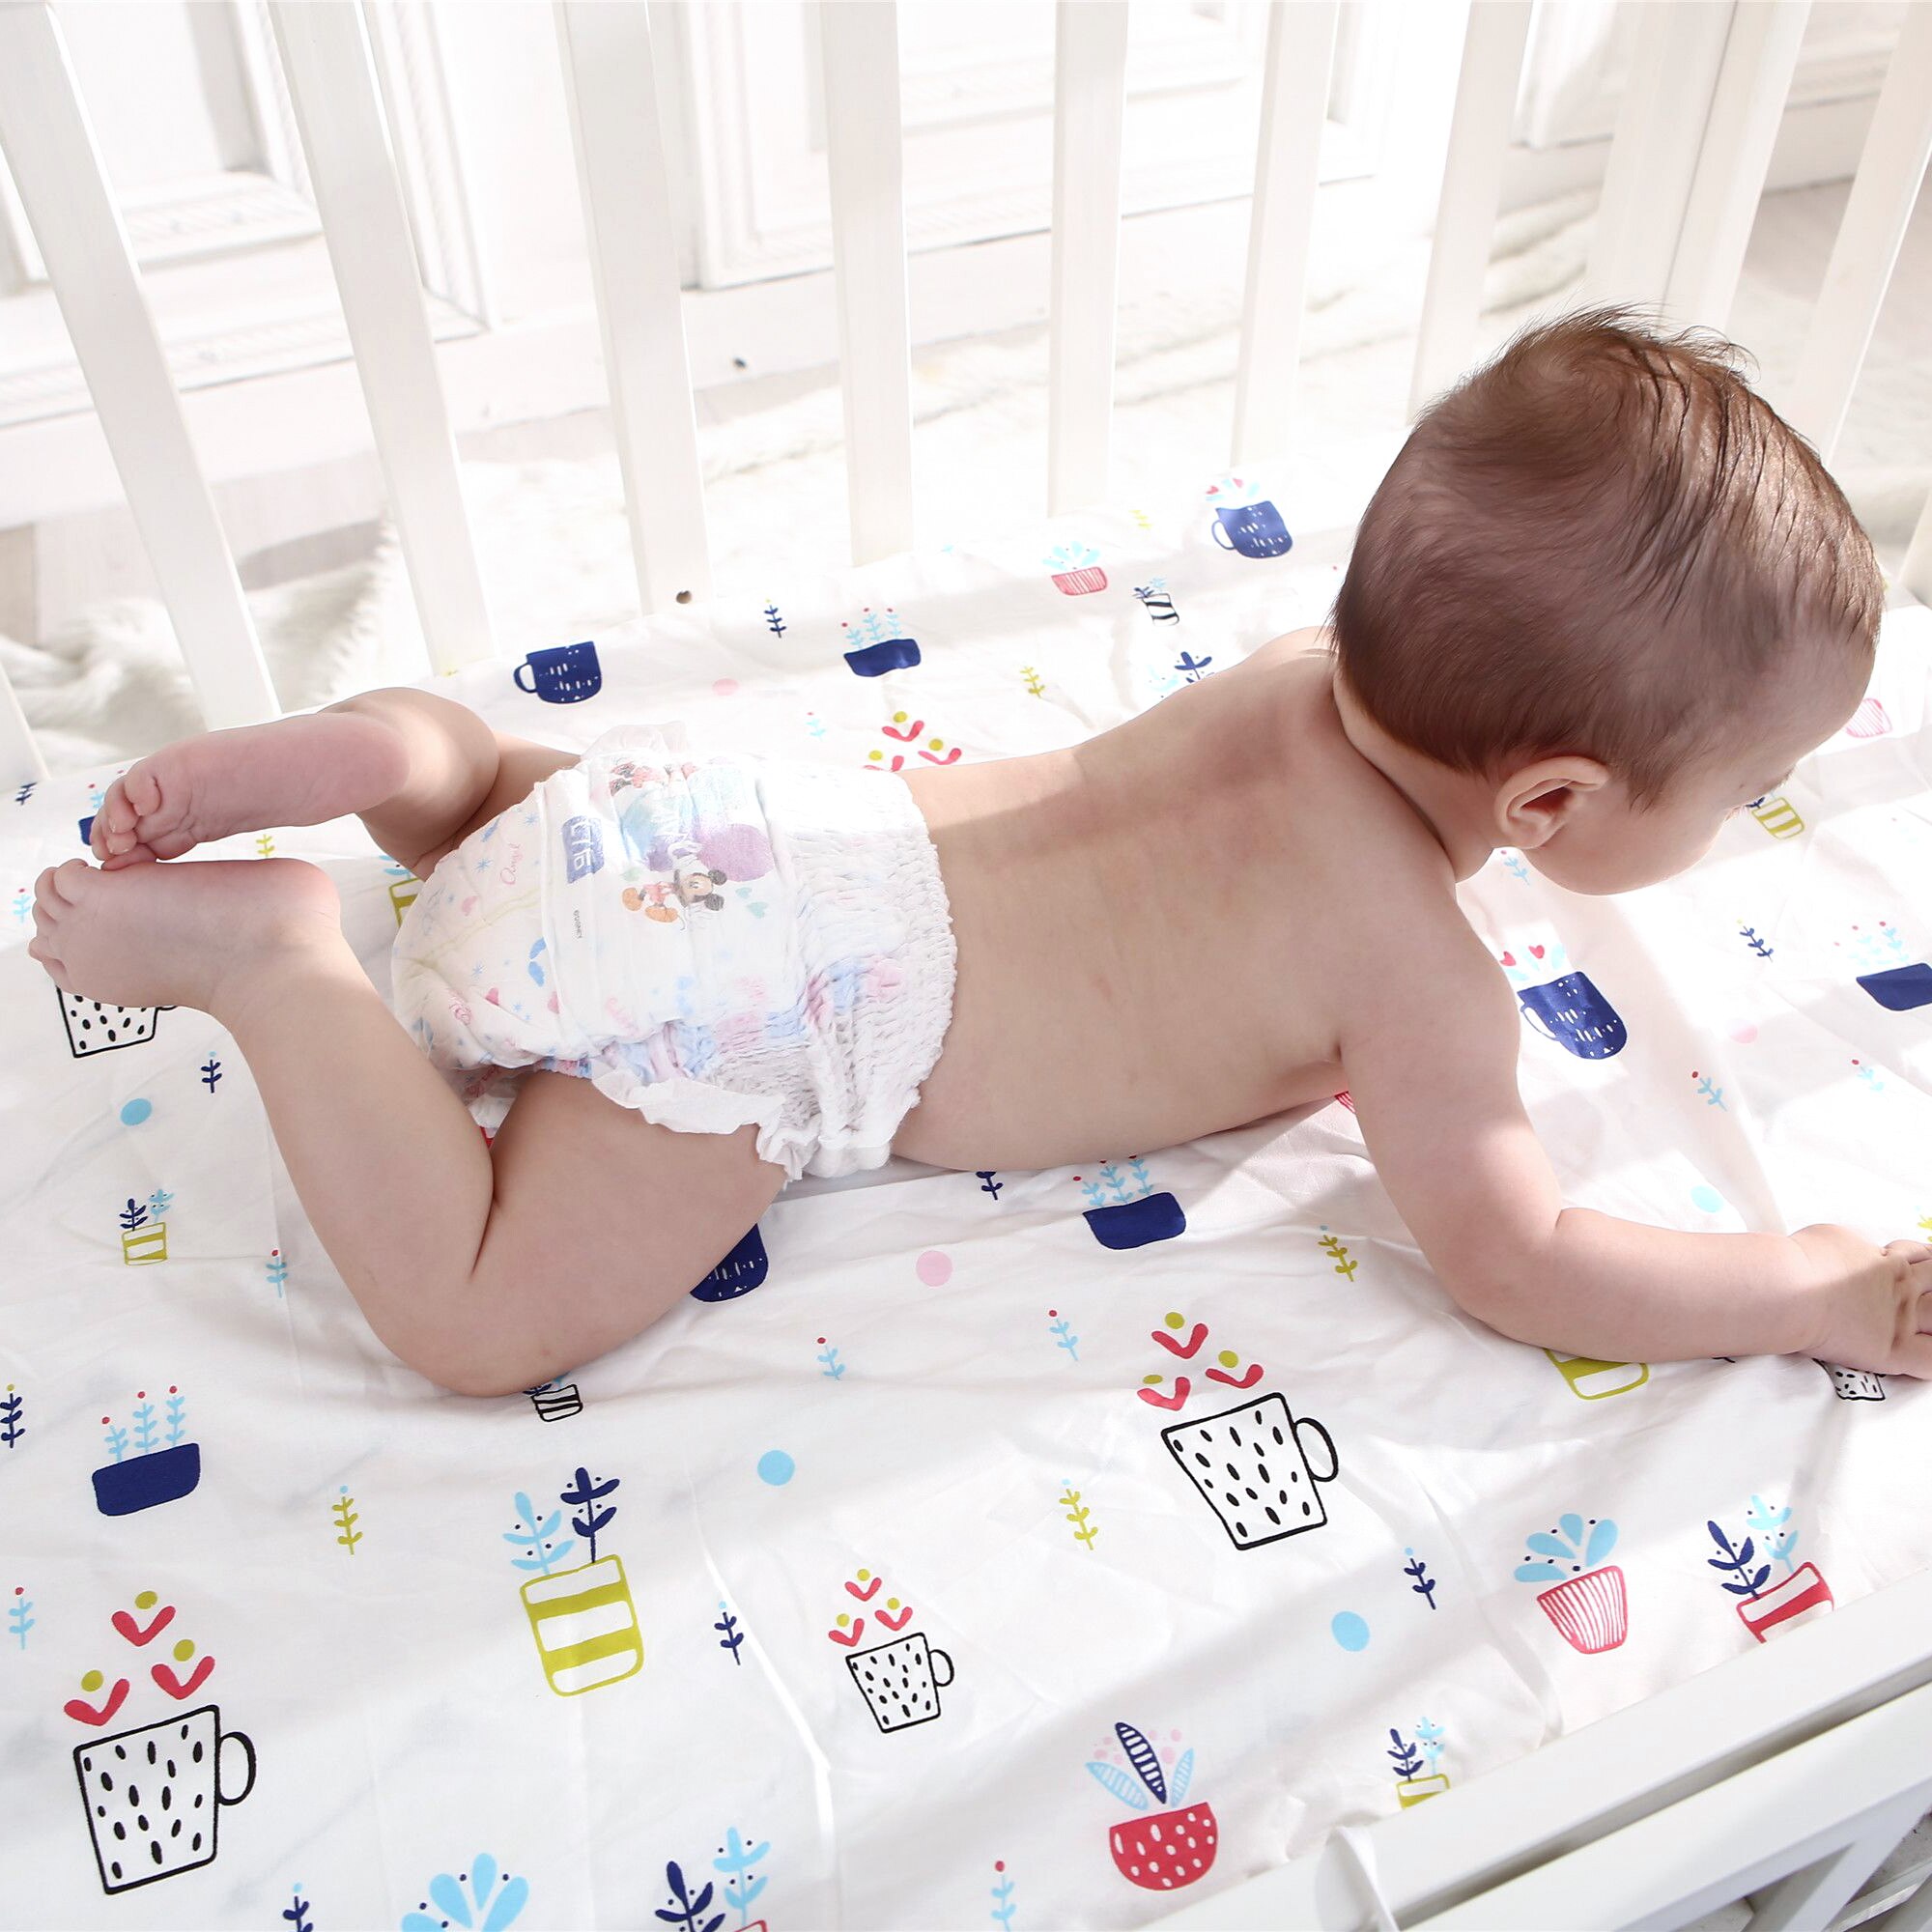 Baby seng madras dække blød beskytter tegneserie trykt nyfødt baby sengetøj til barneseng 100%  bomuld krybbe monteret ark størrelse 130*70cm